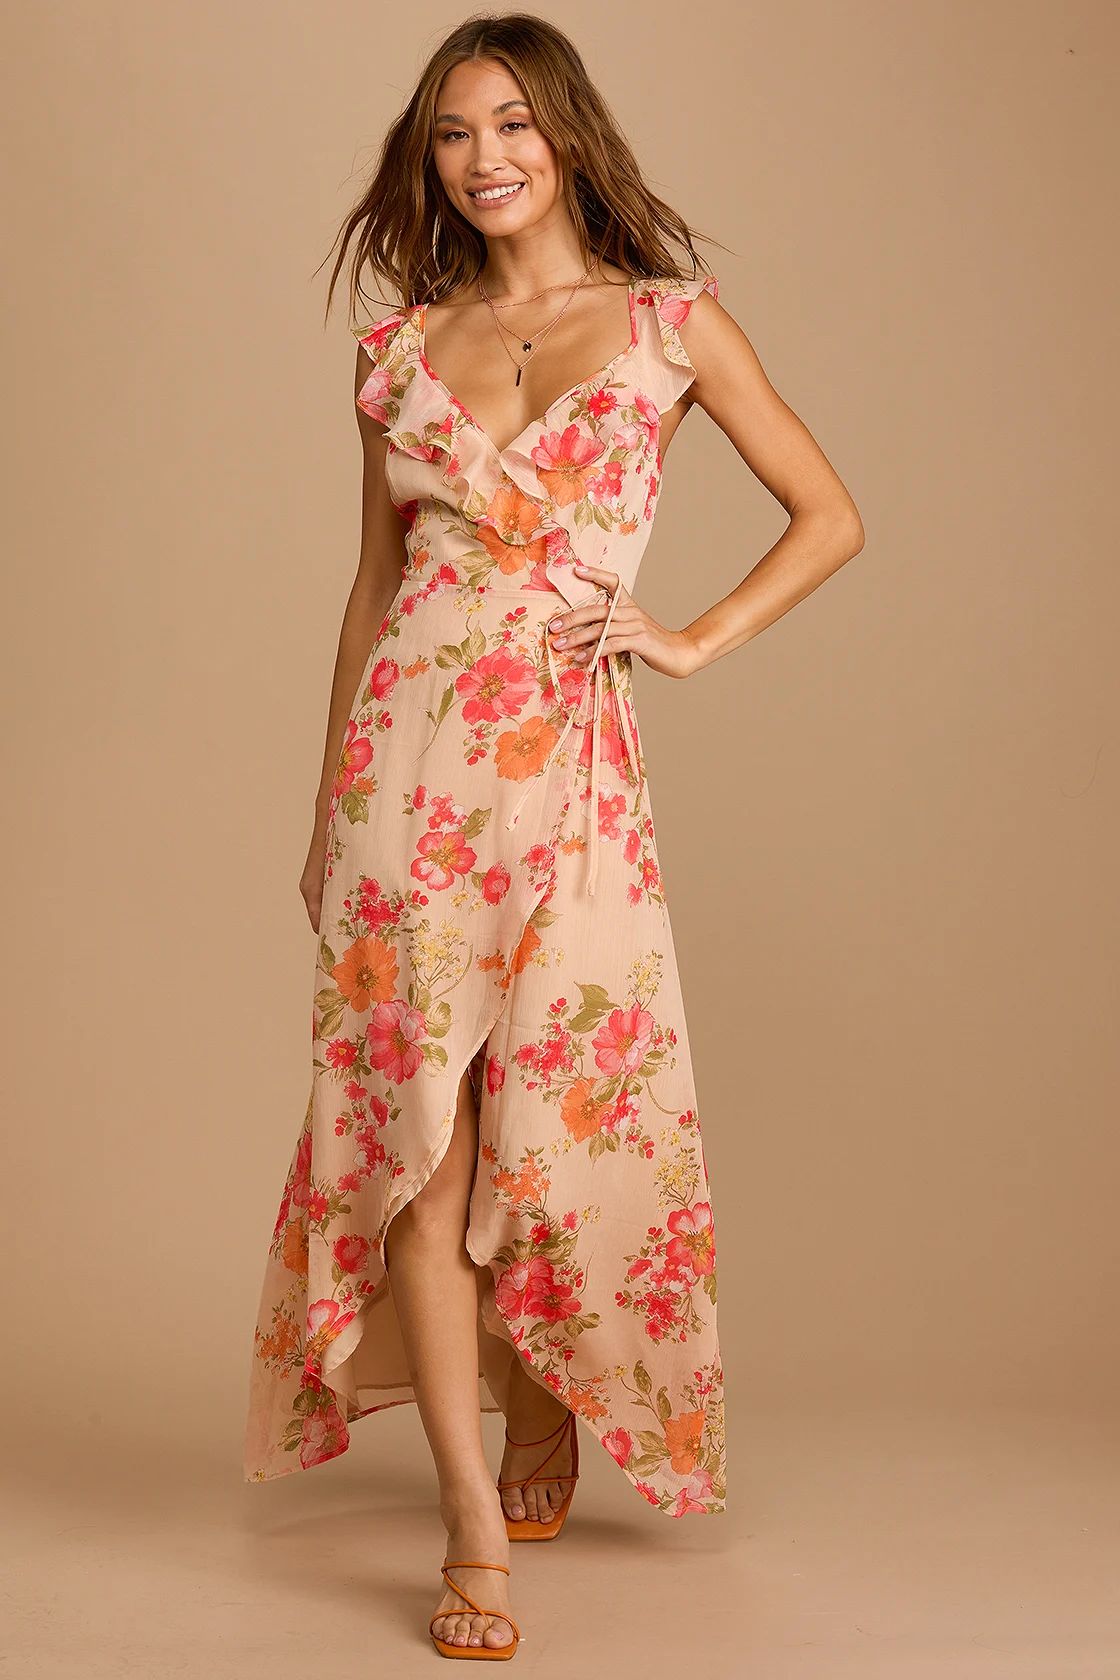 Start of Something New Beige Floral Print Wrap Maxi Dress | Lulus (US)